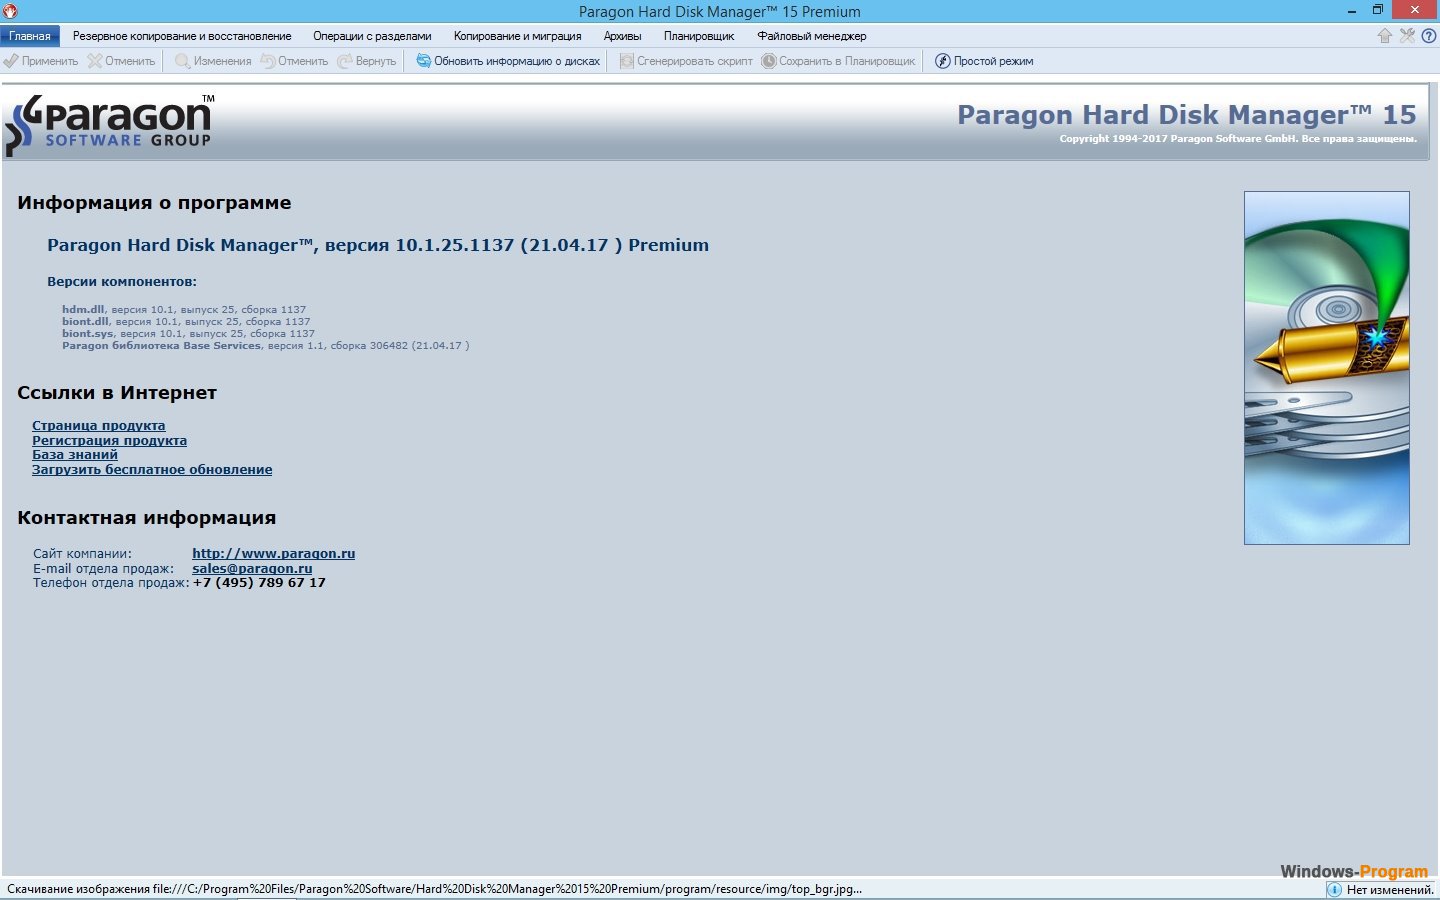 paragon hard disk manager 15 suite 10.1.25.431